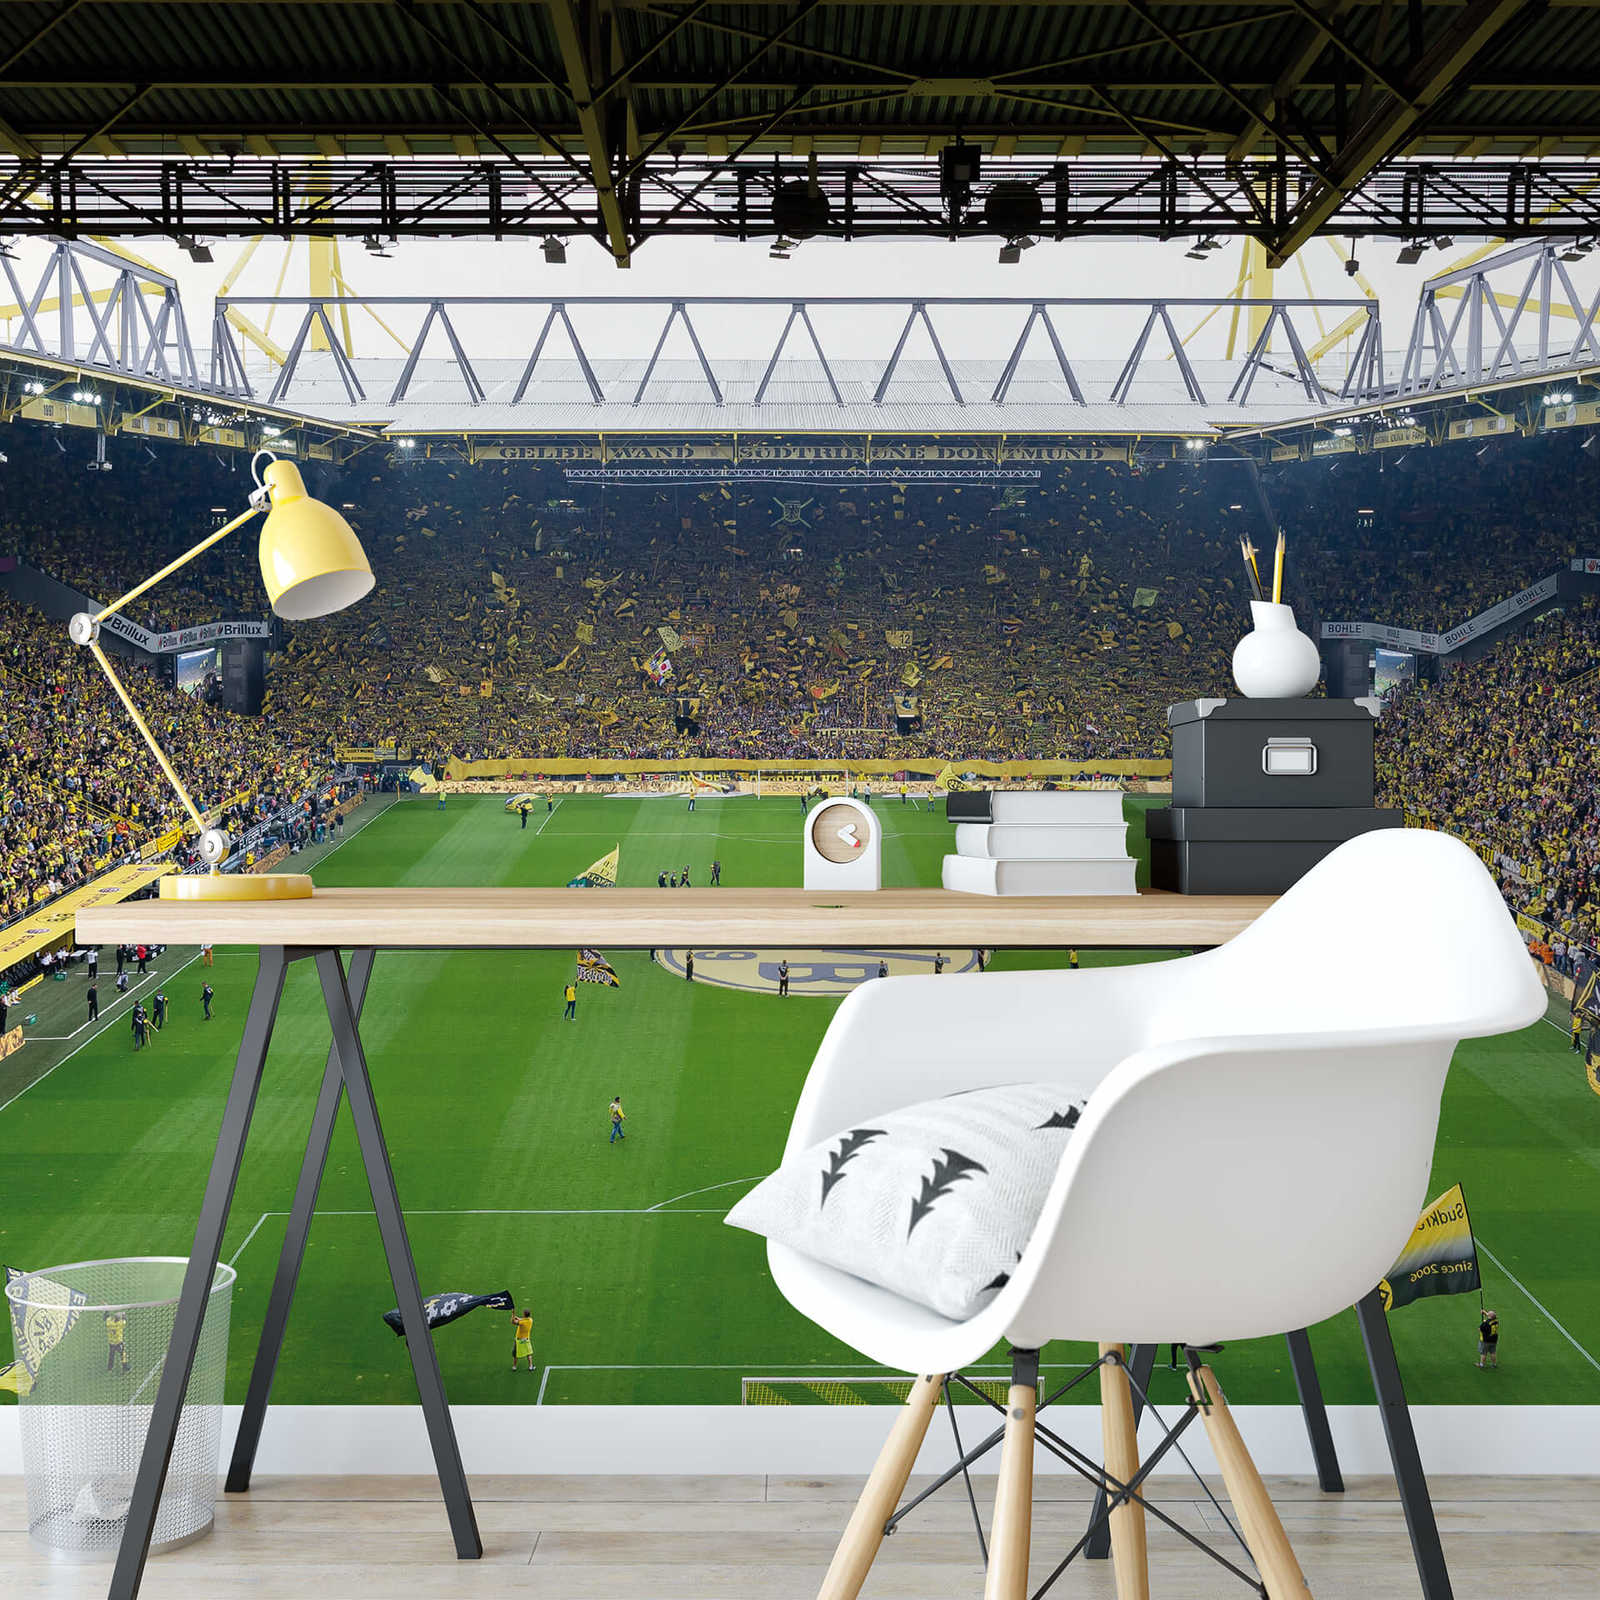             Photo wallpaper Borussia Dortmund stadium with choirs
        